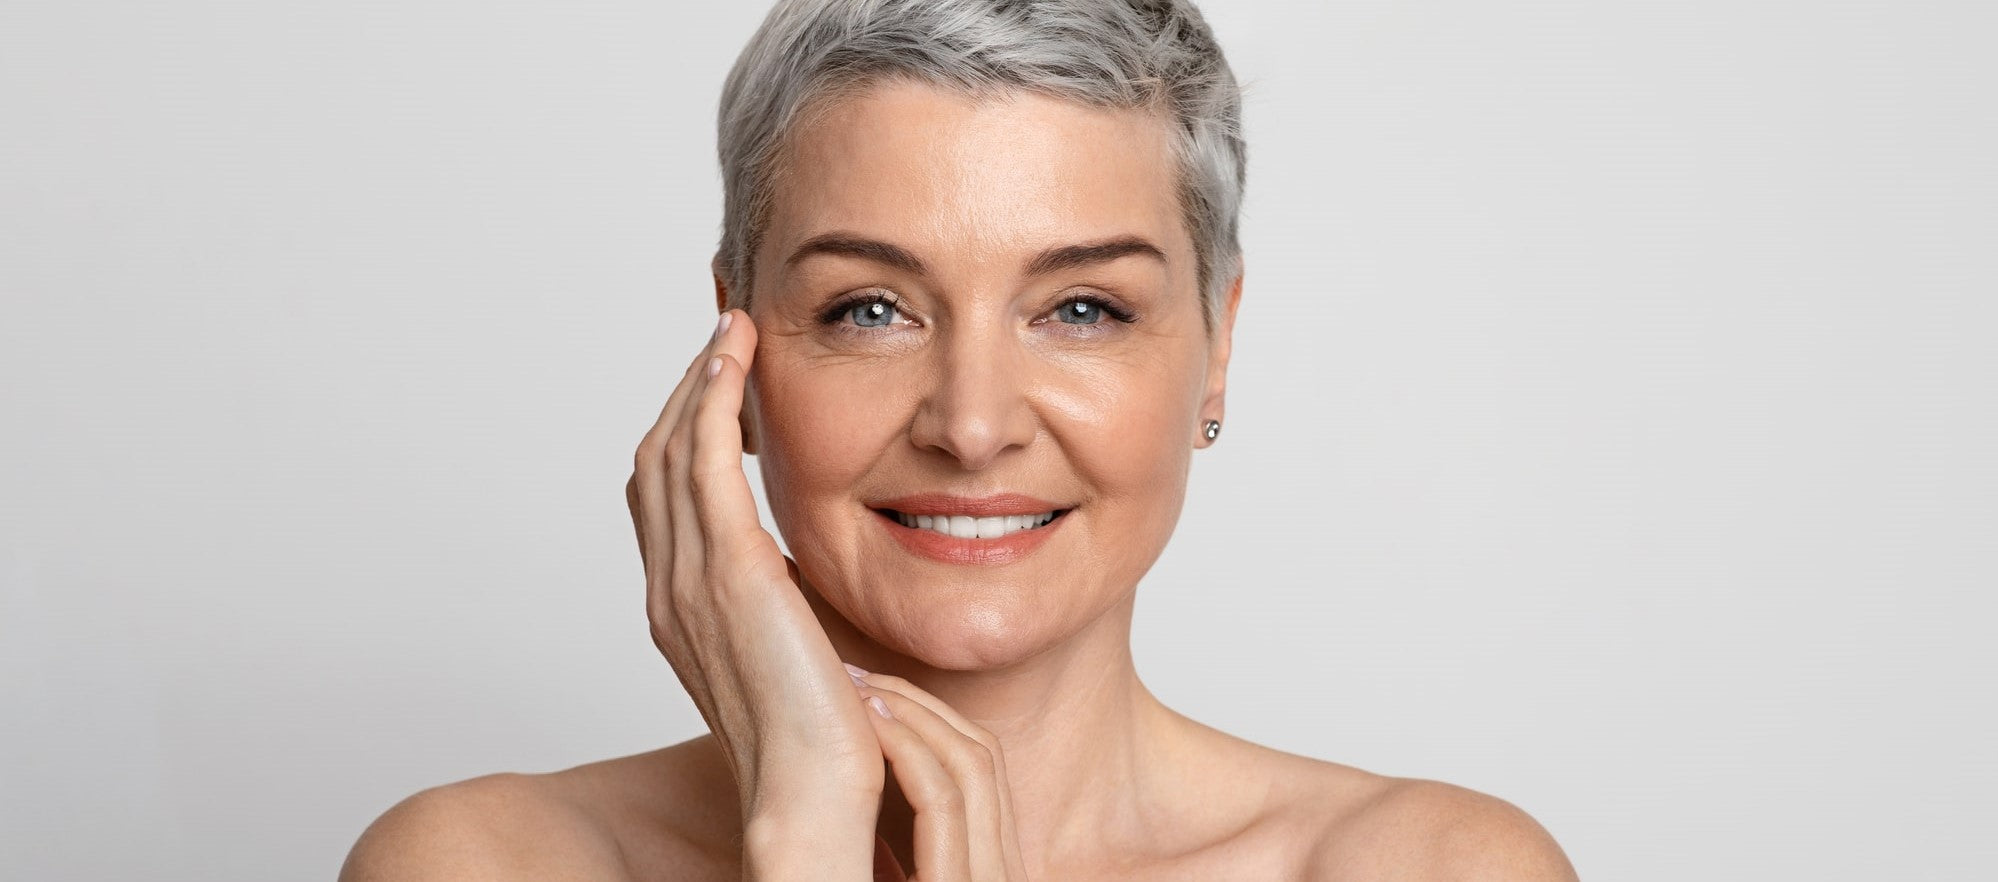 Dr. Jill G5 Essence Plus Whitening Anti Aging Moisturizer 30ml – ASIAN  BEAUTY SUPPLY